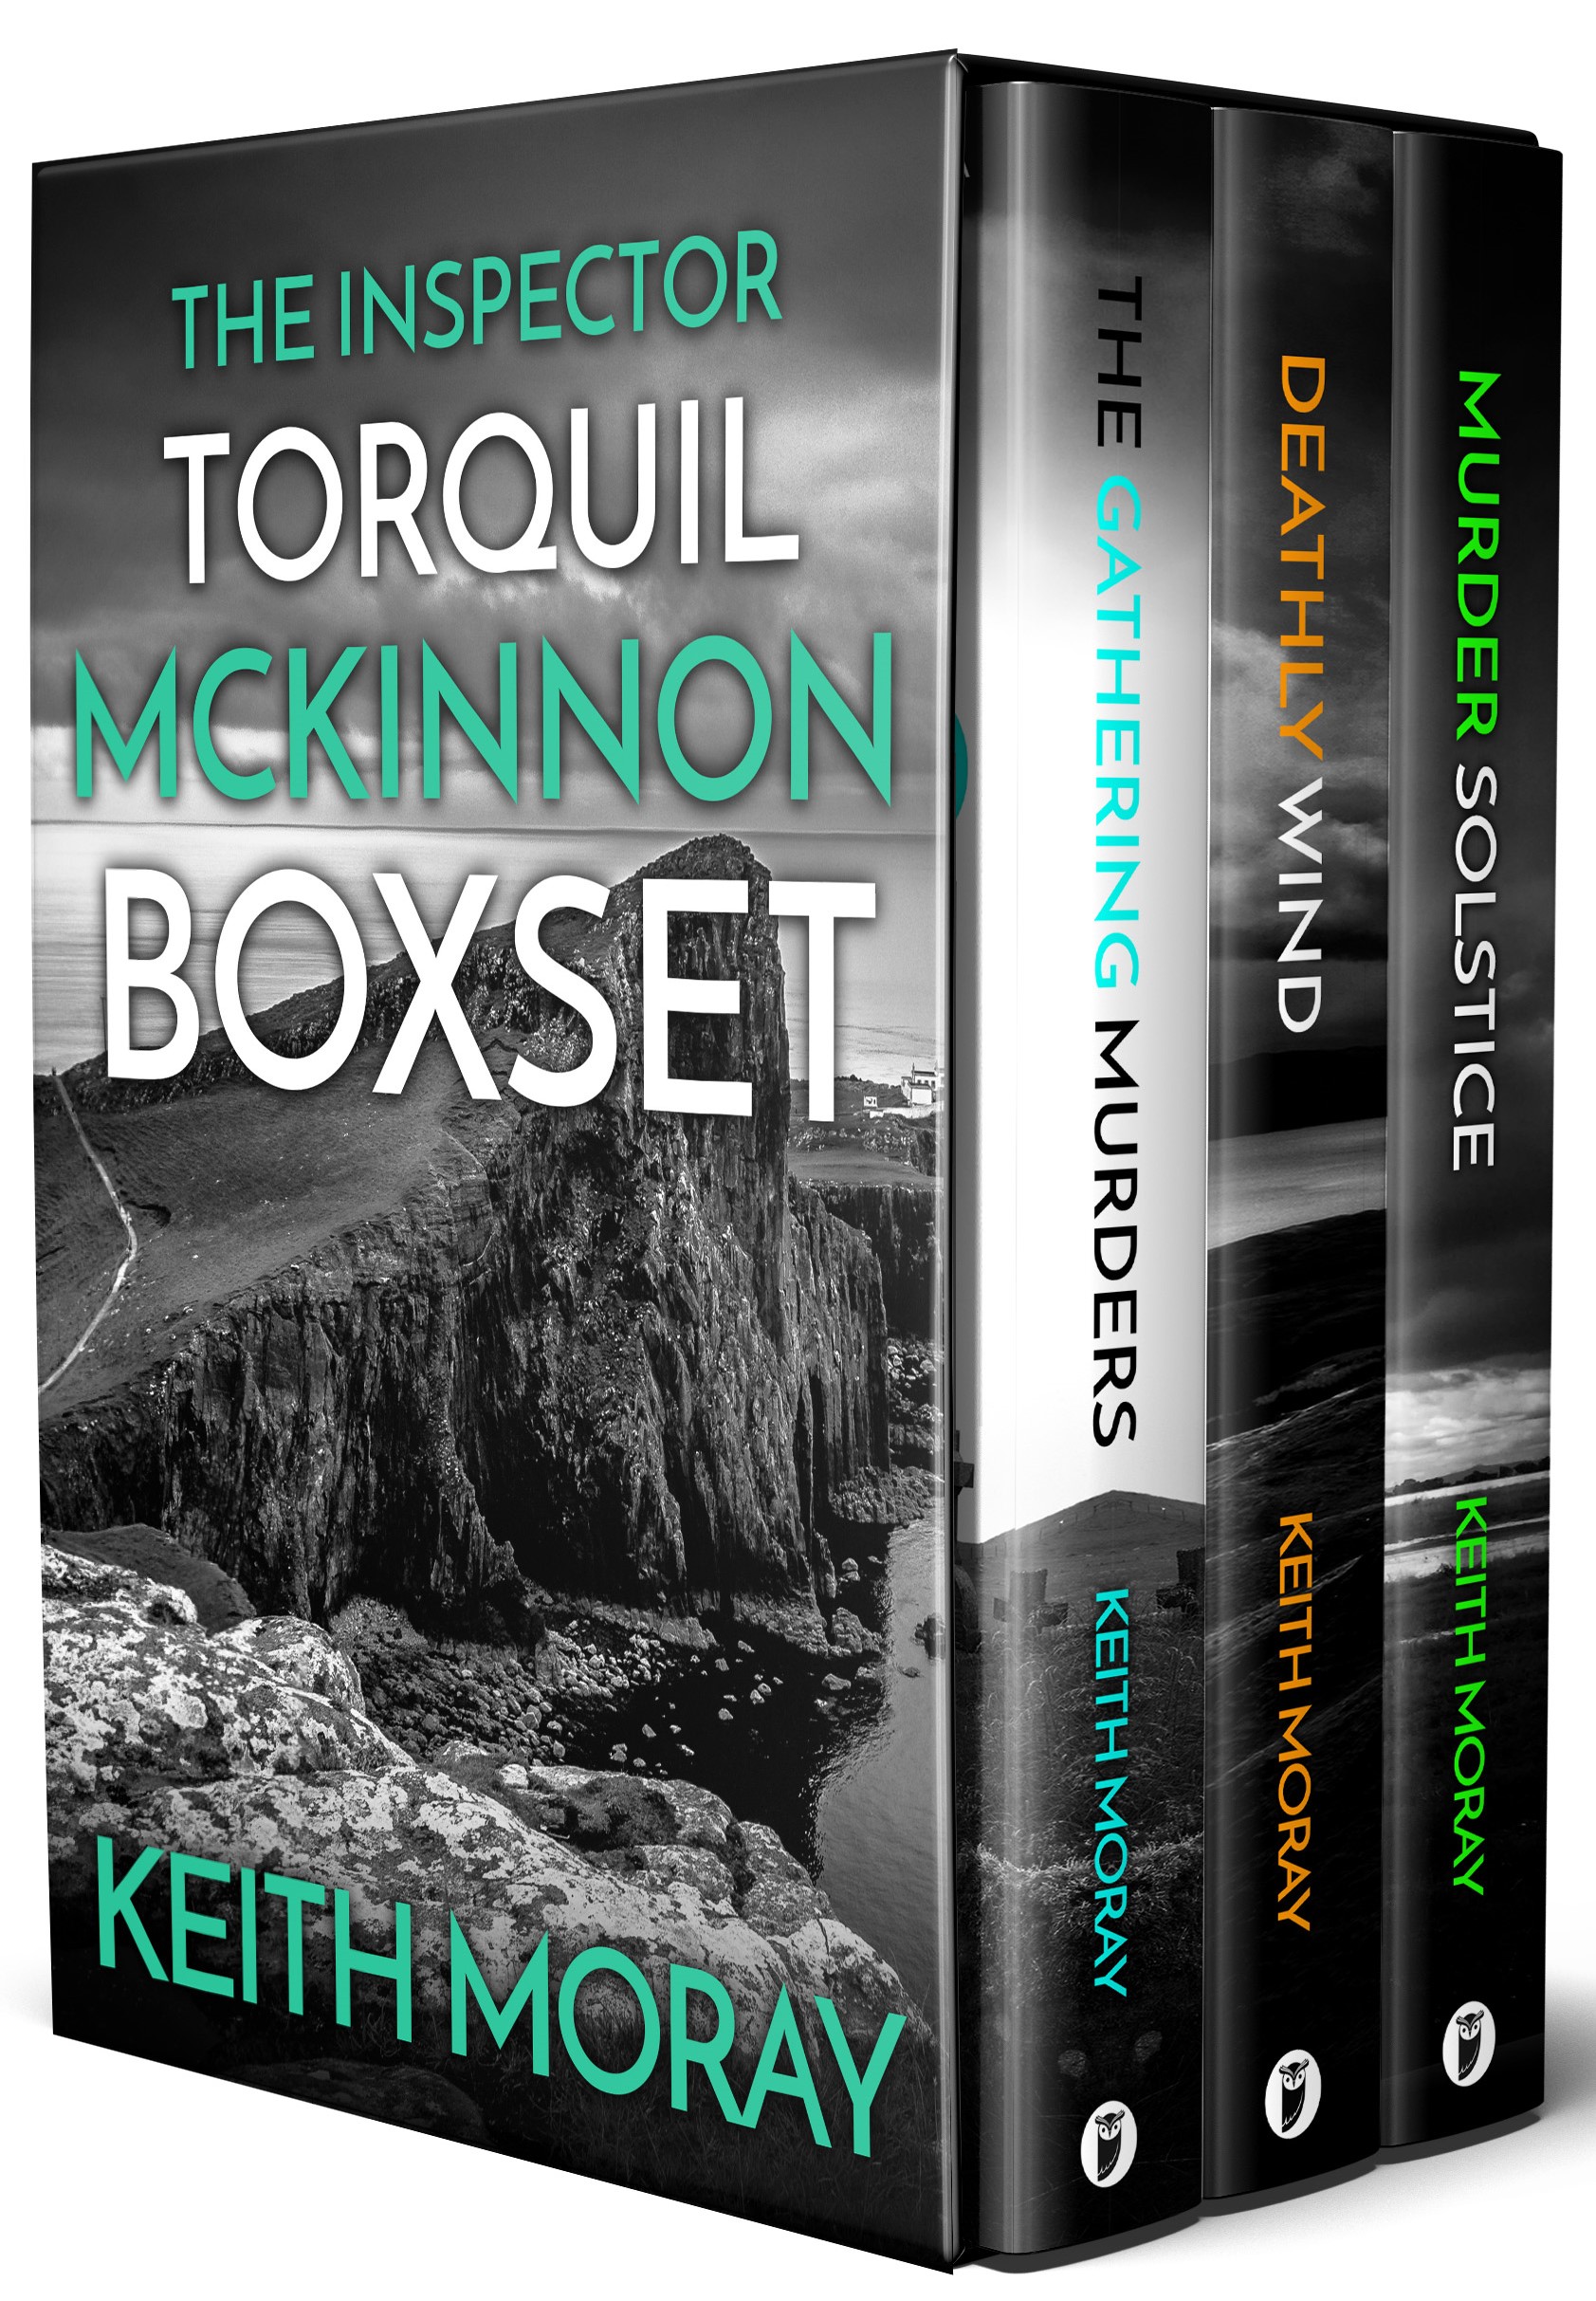 The Inspector Torquil McKinnon Boxset